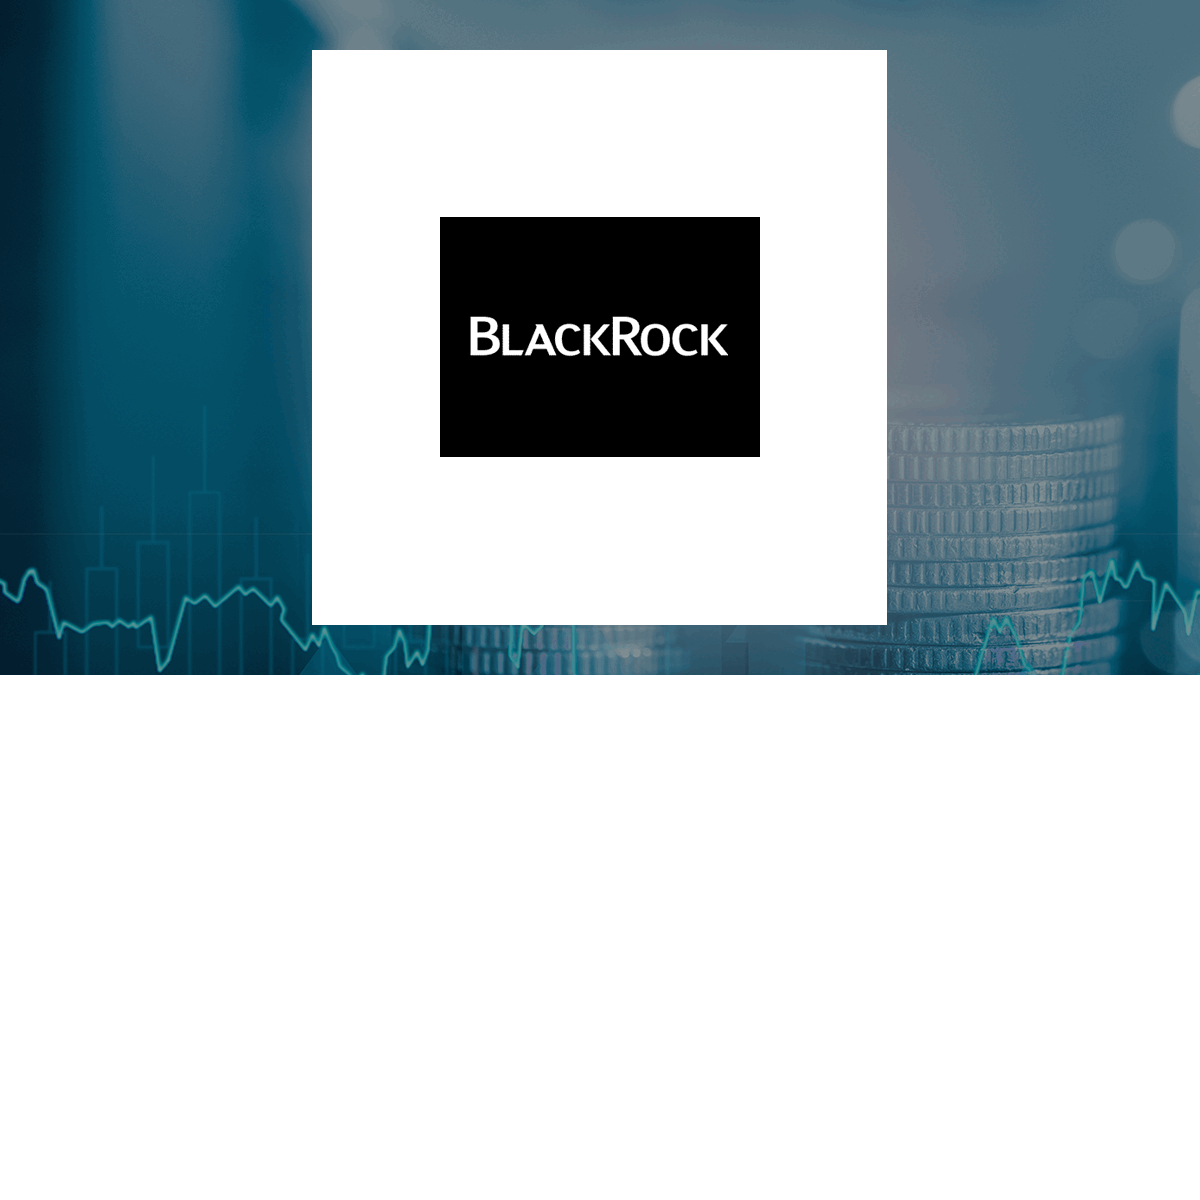 BlackRock logo with Finance background